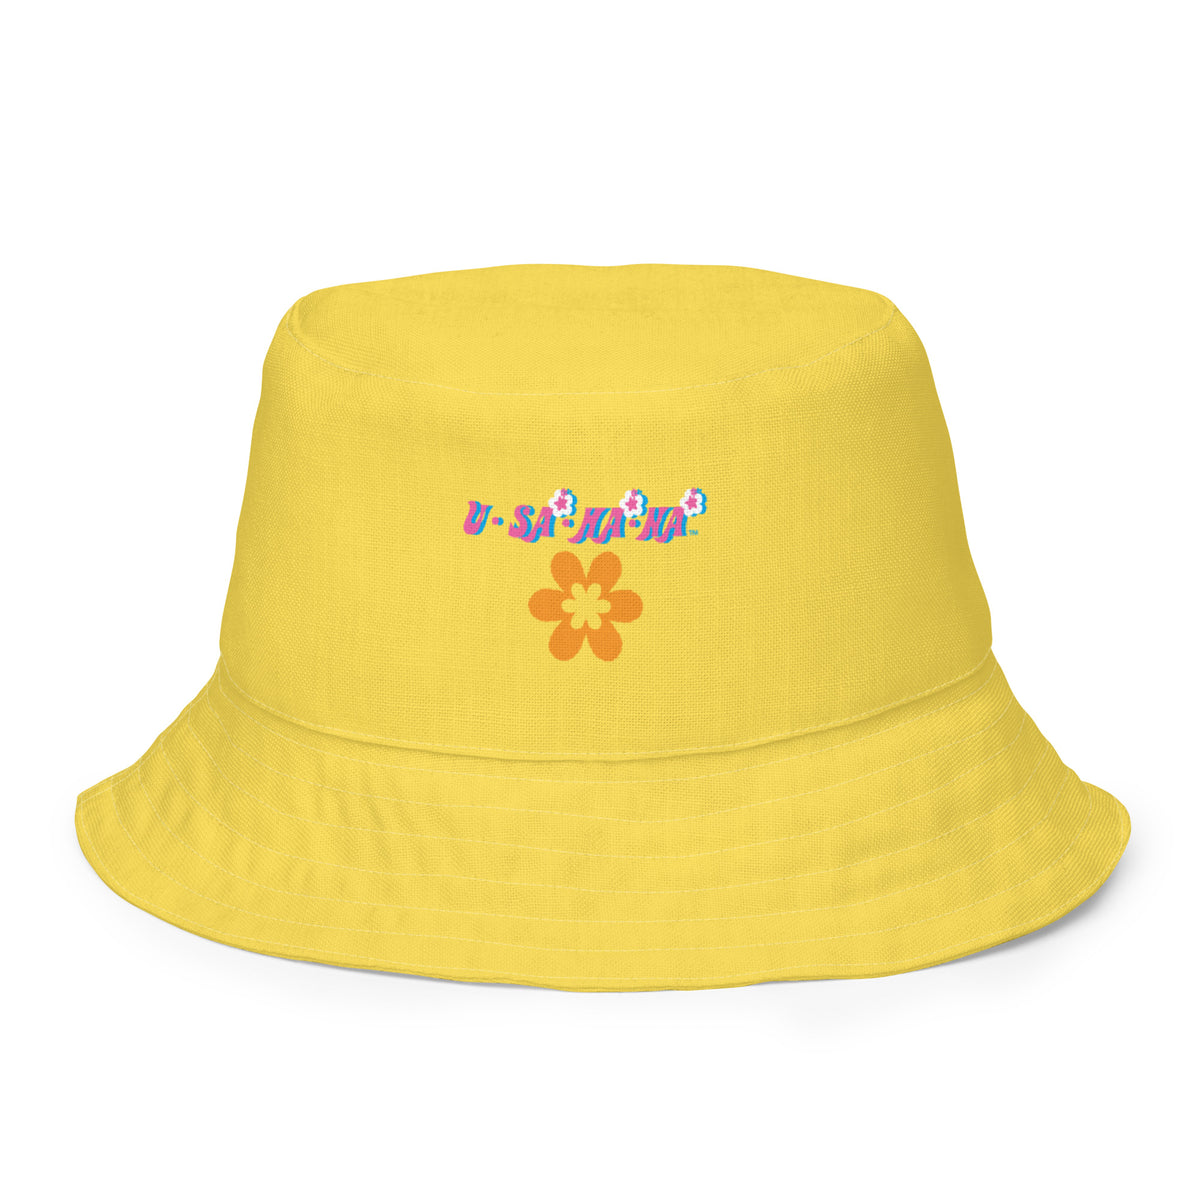 U*SA*HA*NA Pool Party Reversible Bucket Hat, L/XL